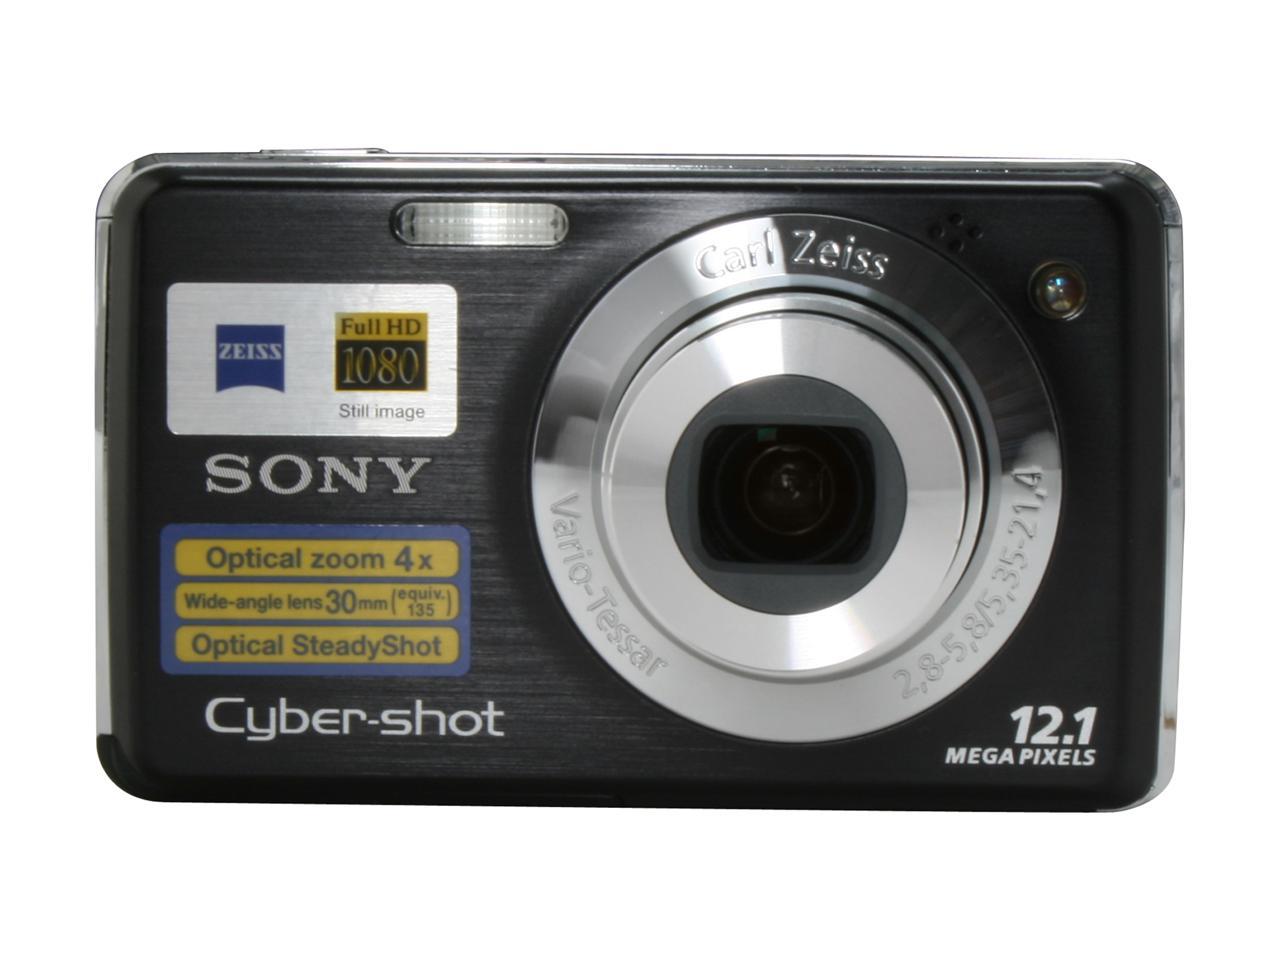 SONY Cyber-shot DSC-W220 Black 12.1 MP Digital Camera - Newegg.com